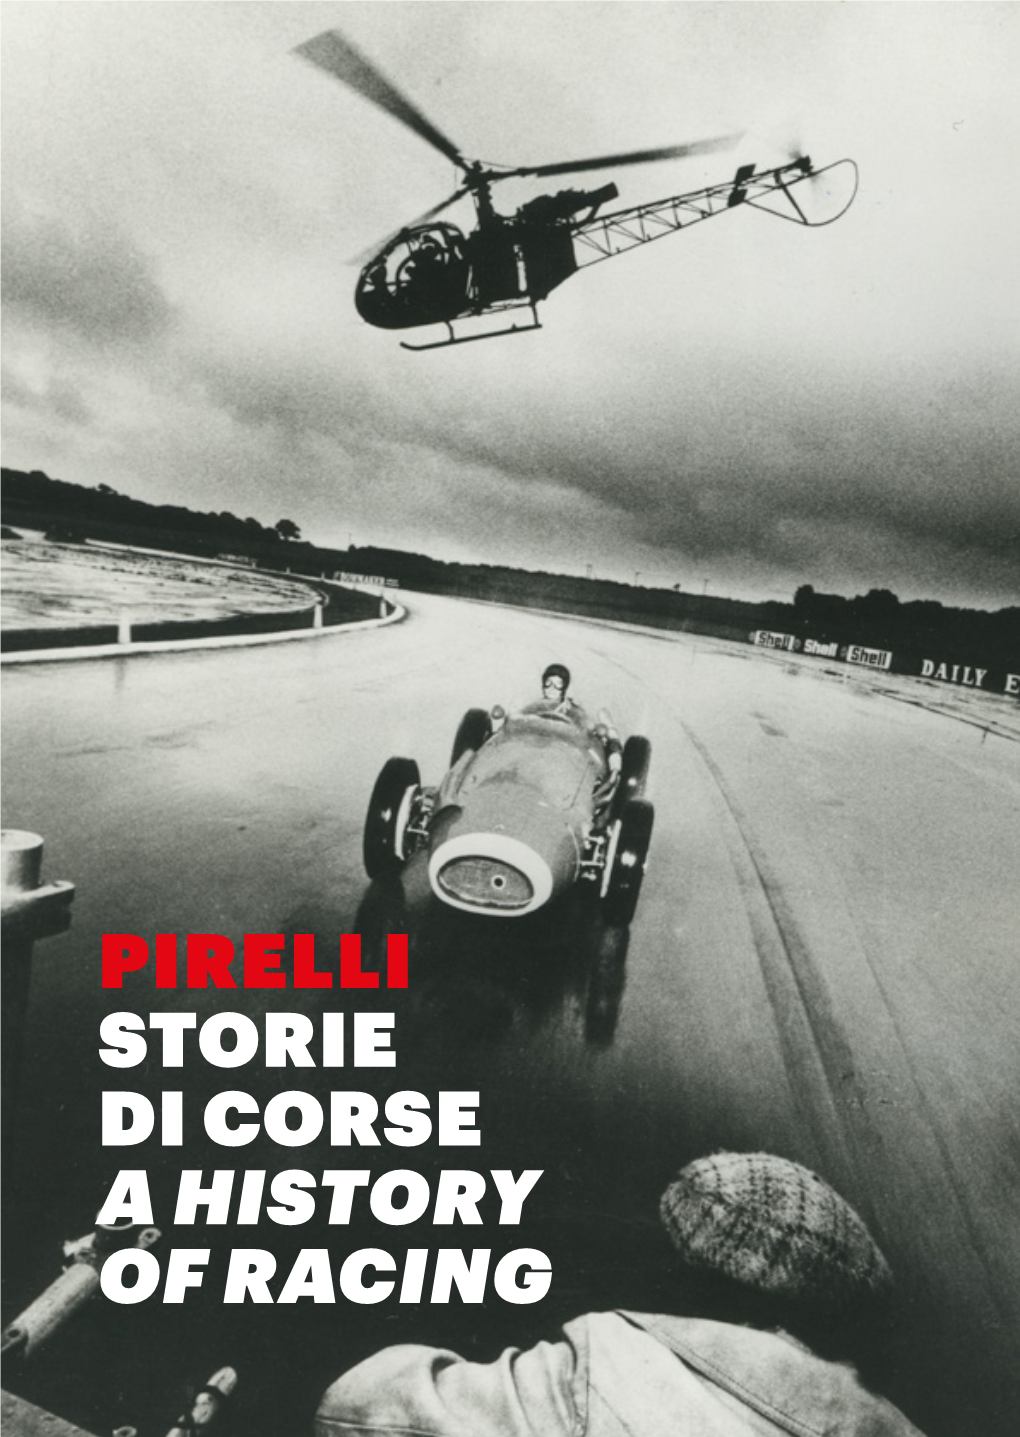 Pirelli Storie Di Corse a History of Racing